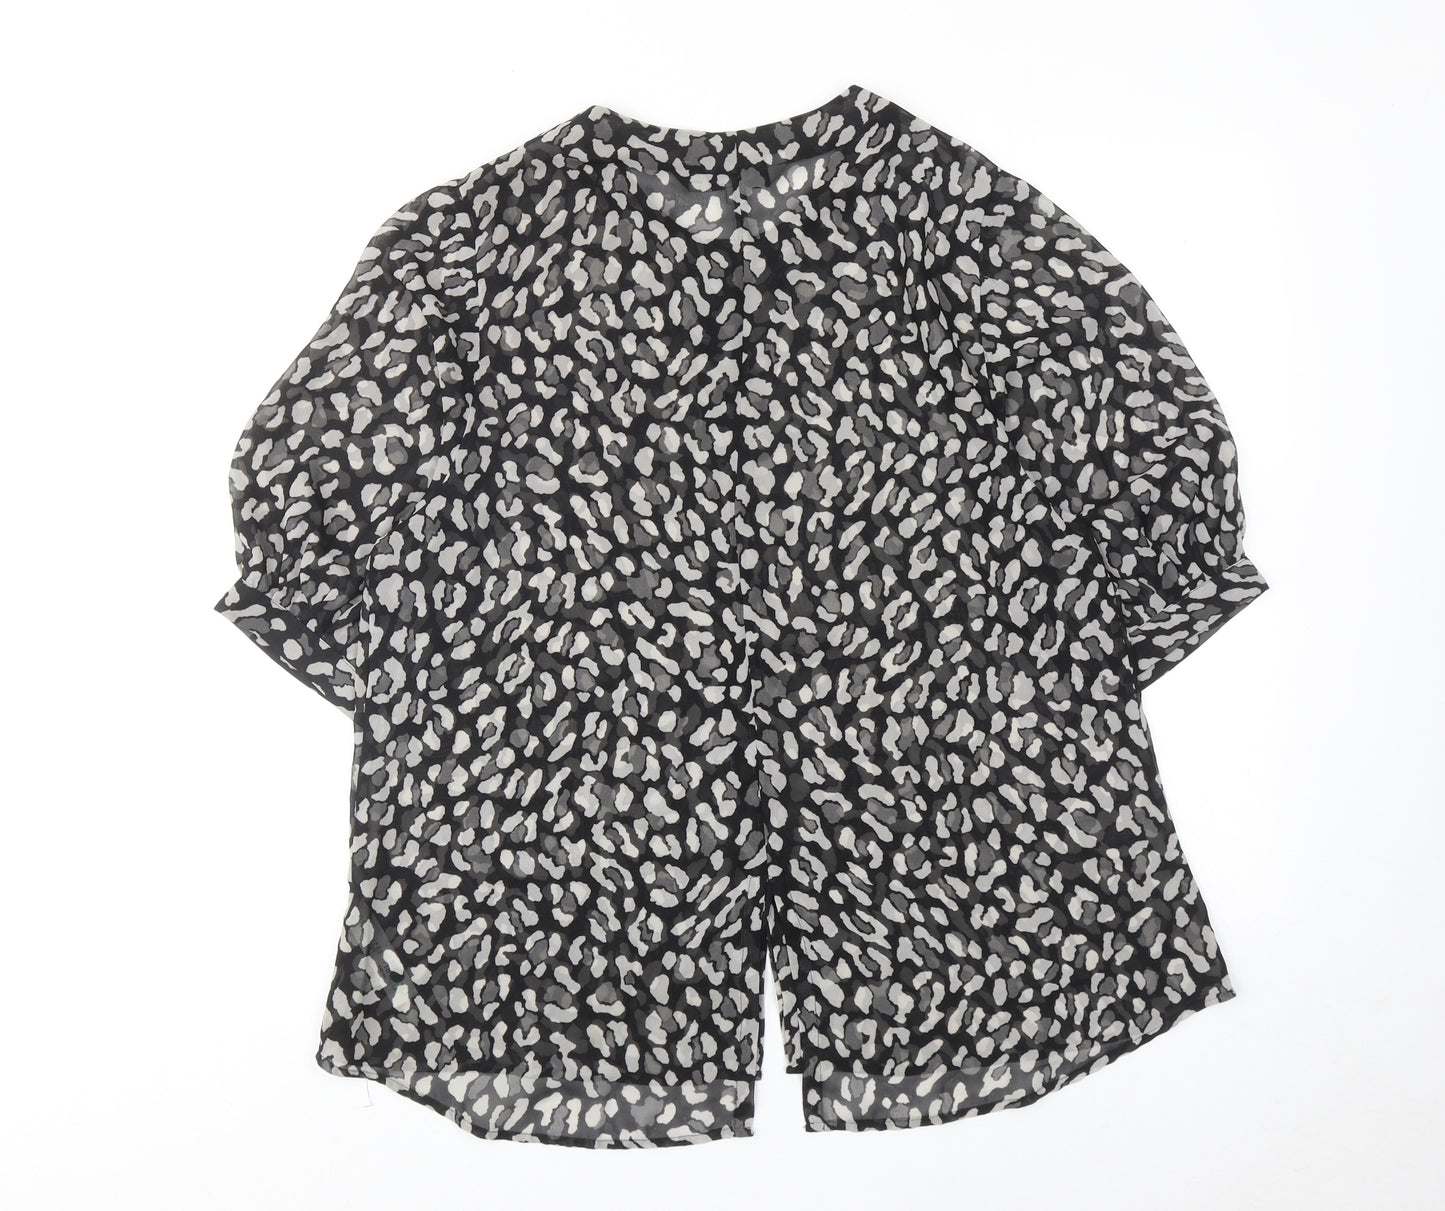 Preen/ Edition Womens Black Animal Print Polyester Basic Blouse Size 6 Boat Neck - Leopard Print